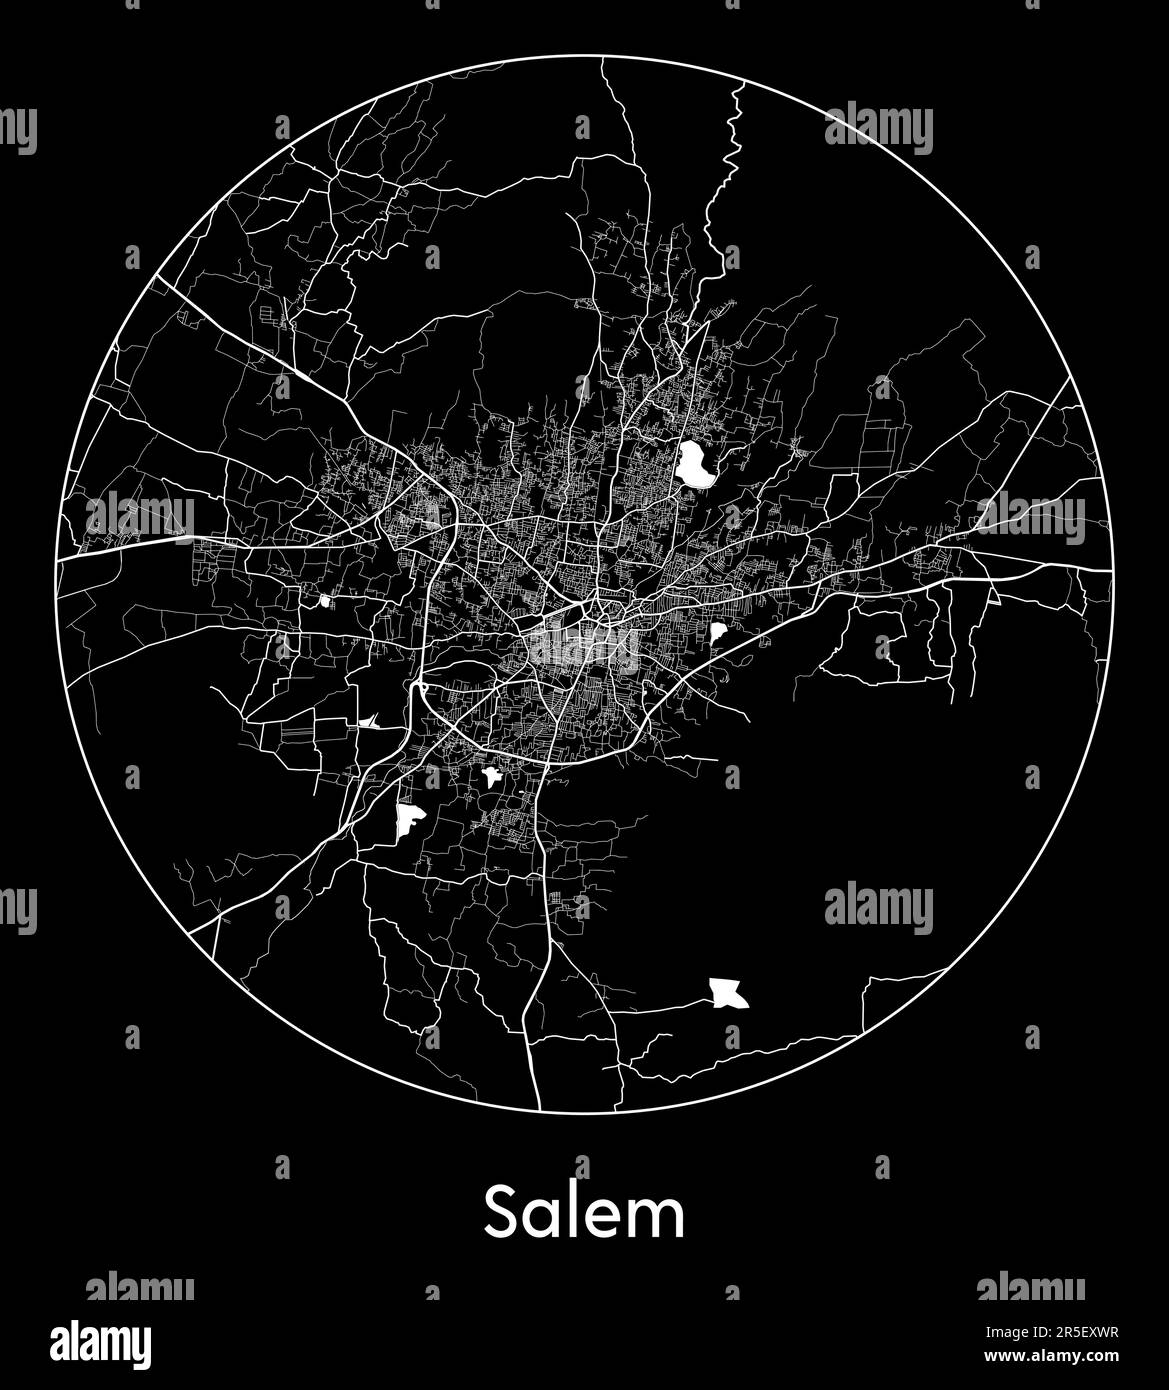 City Map Salem India Asia vector illustration Stock Vector Image & Art ...